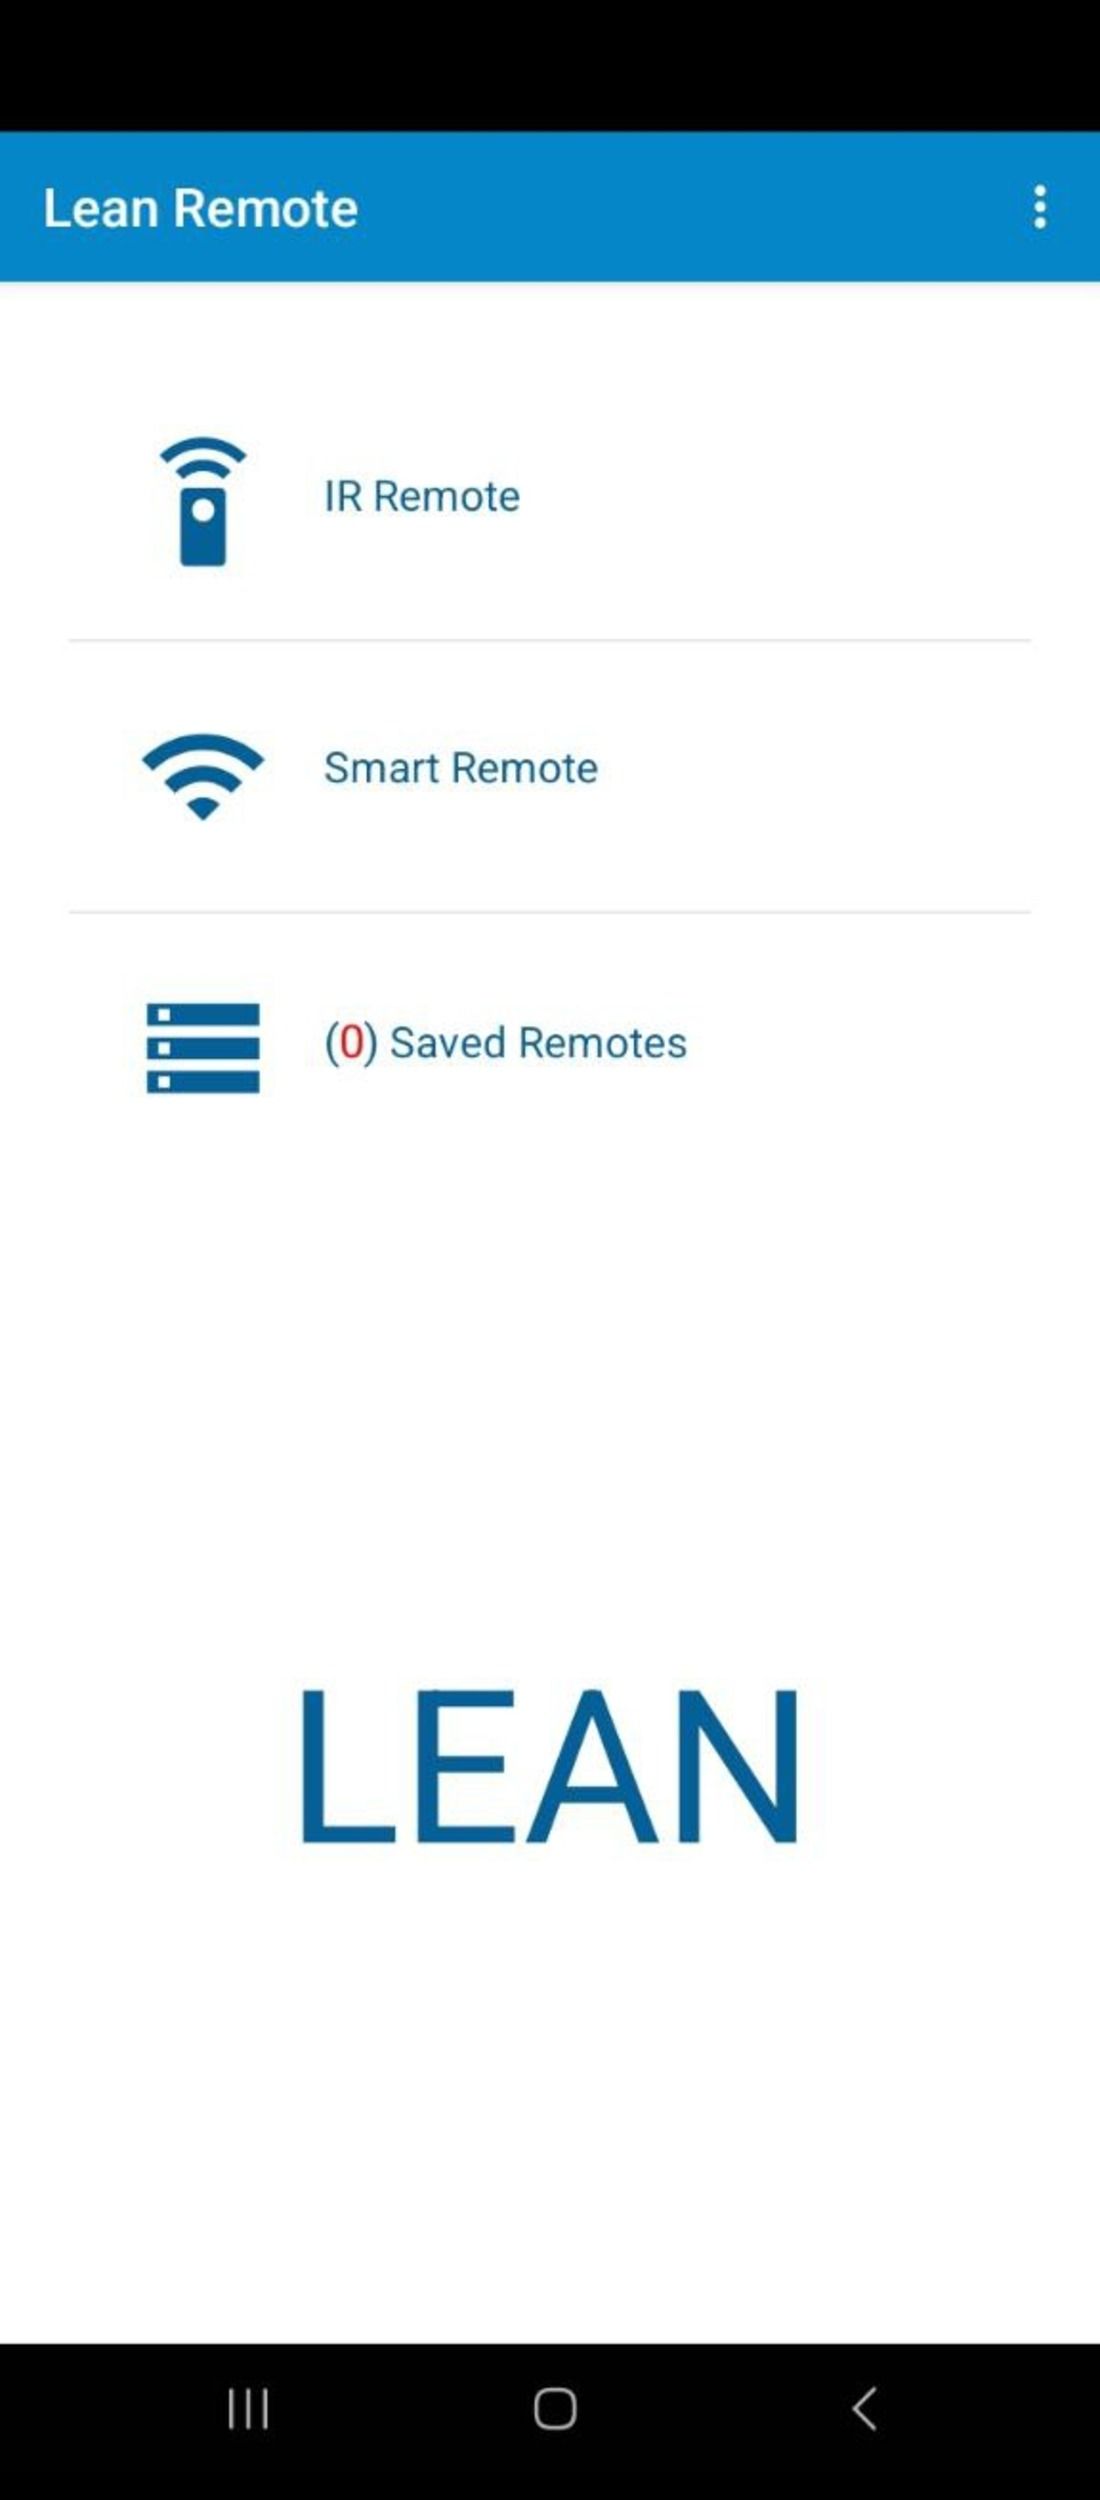 Lean remote app interface